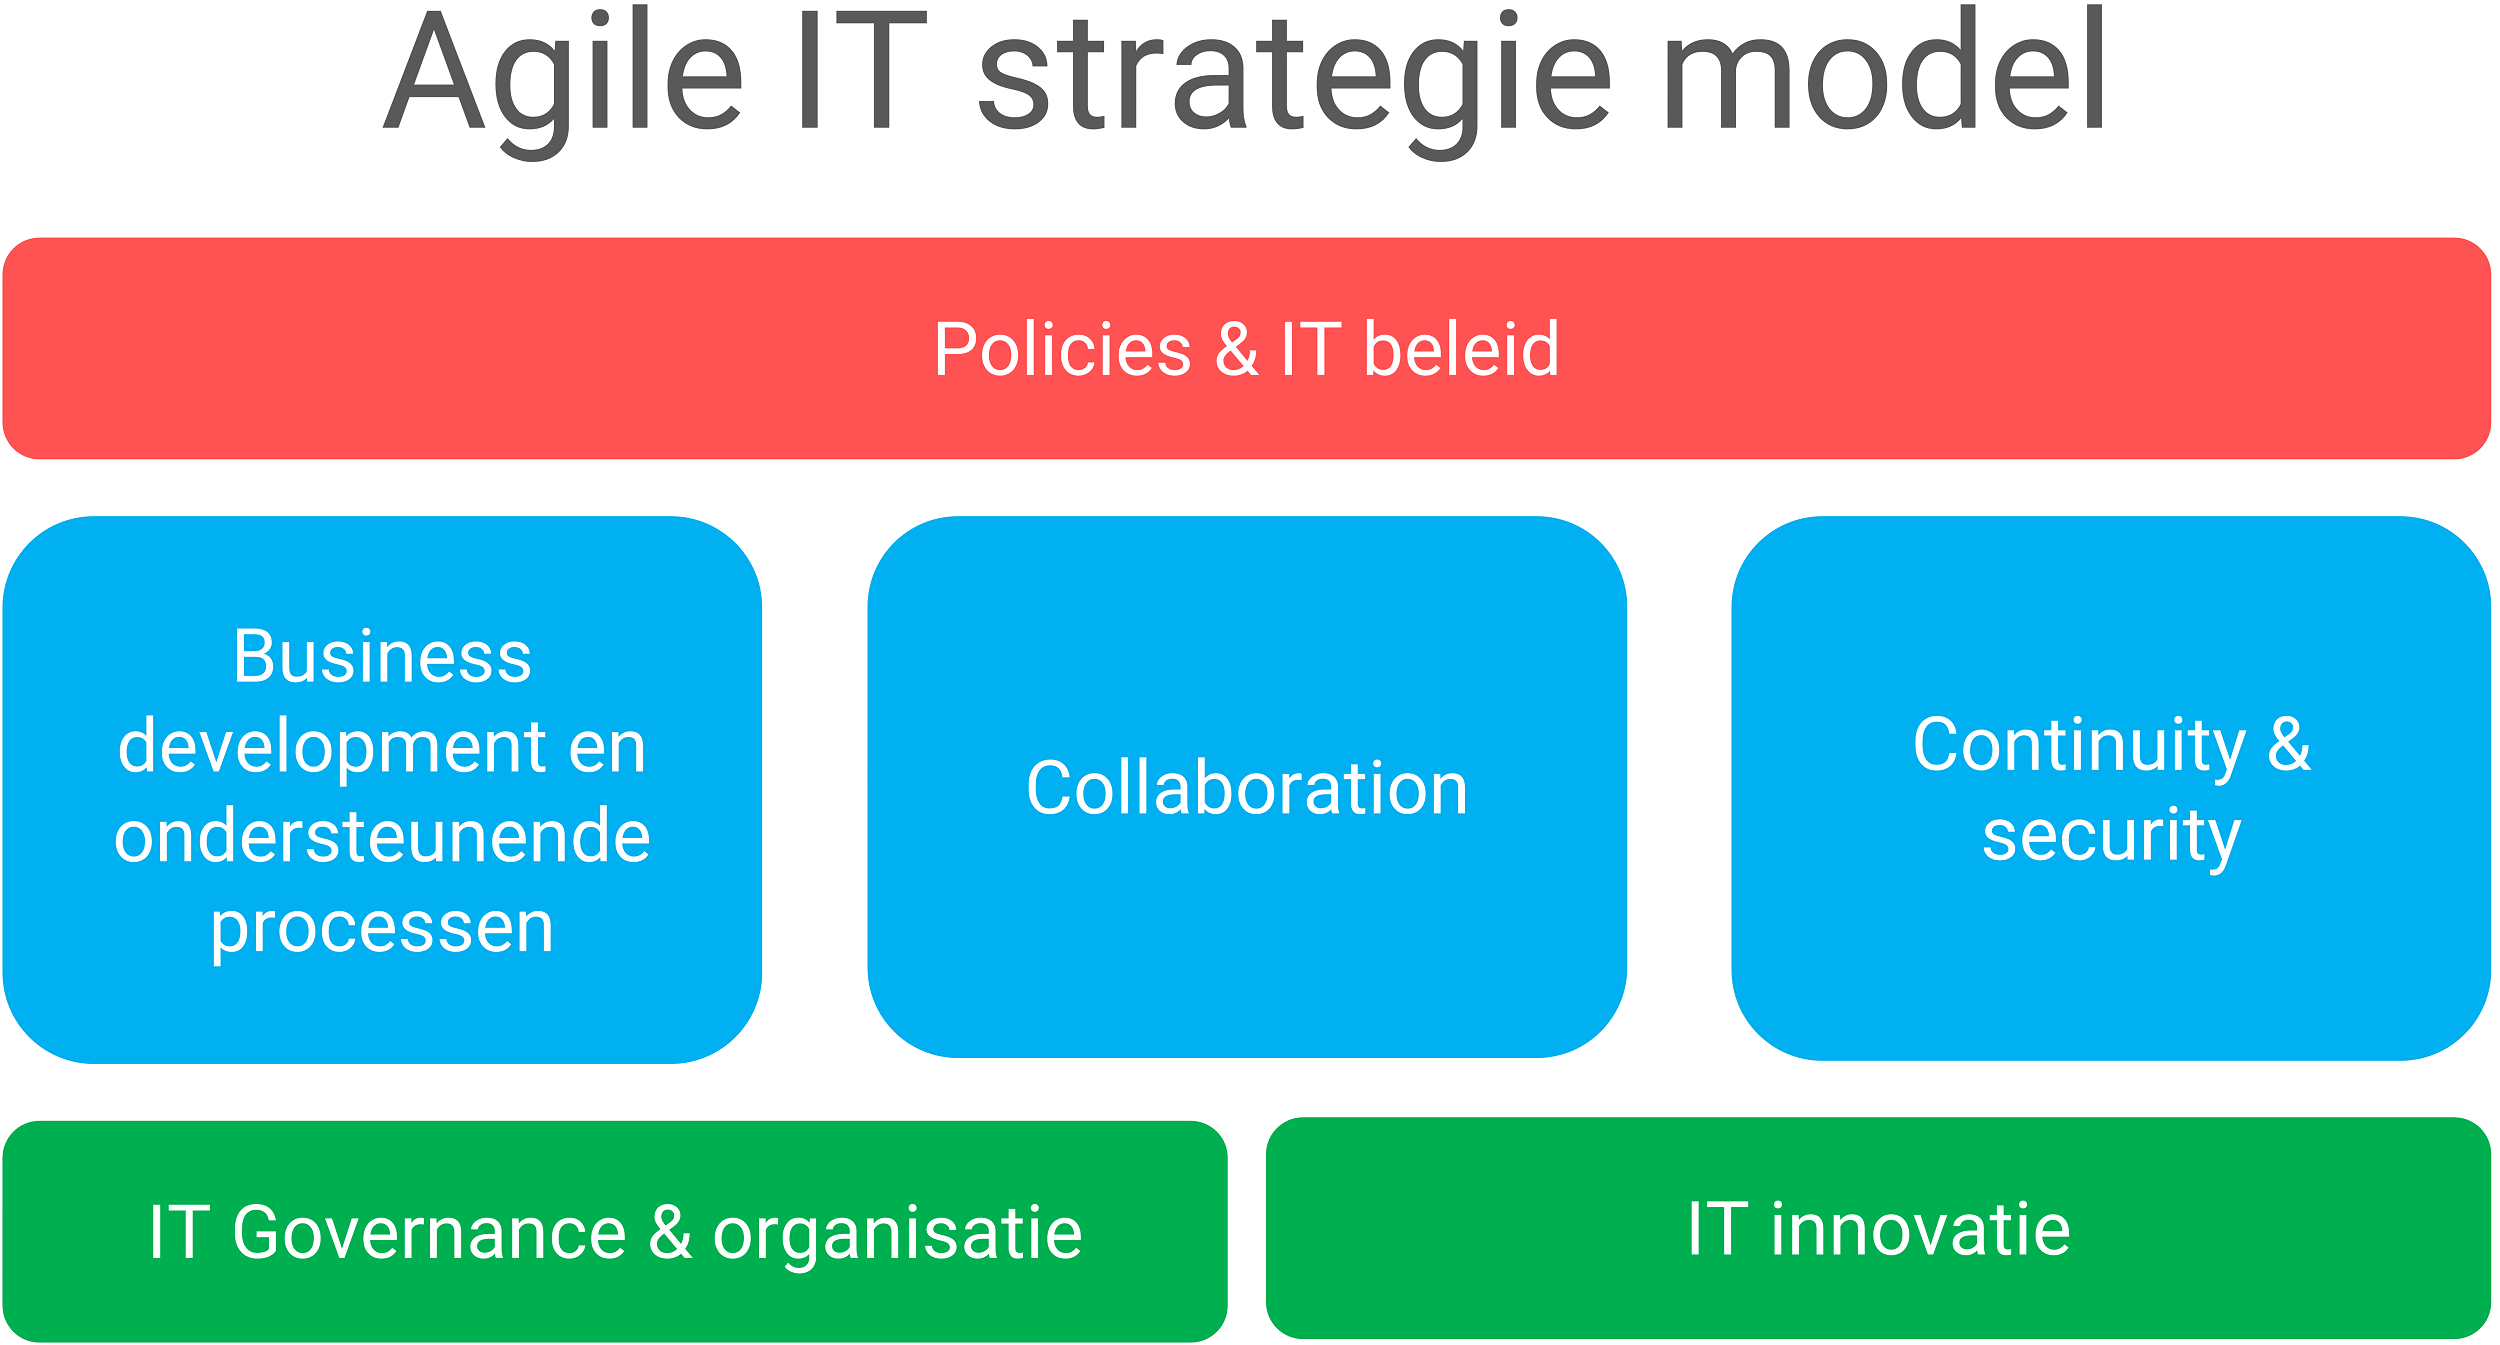 Agile IT strategie modelmatig weergegeven